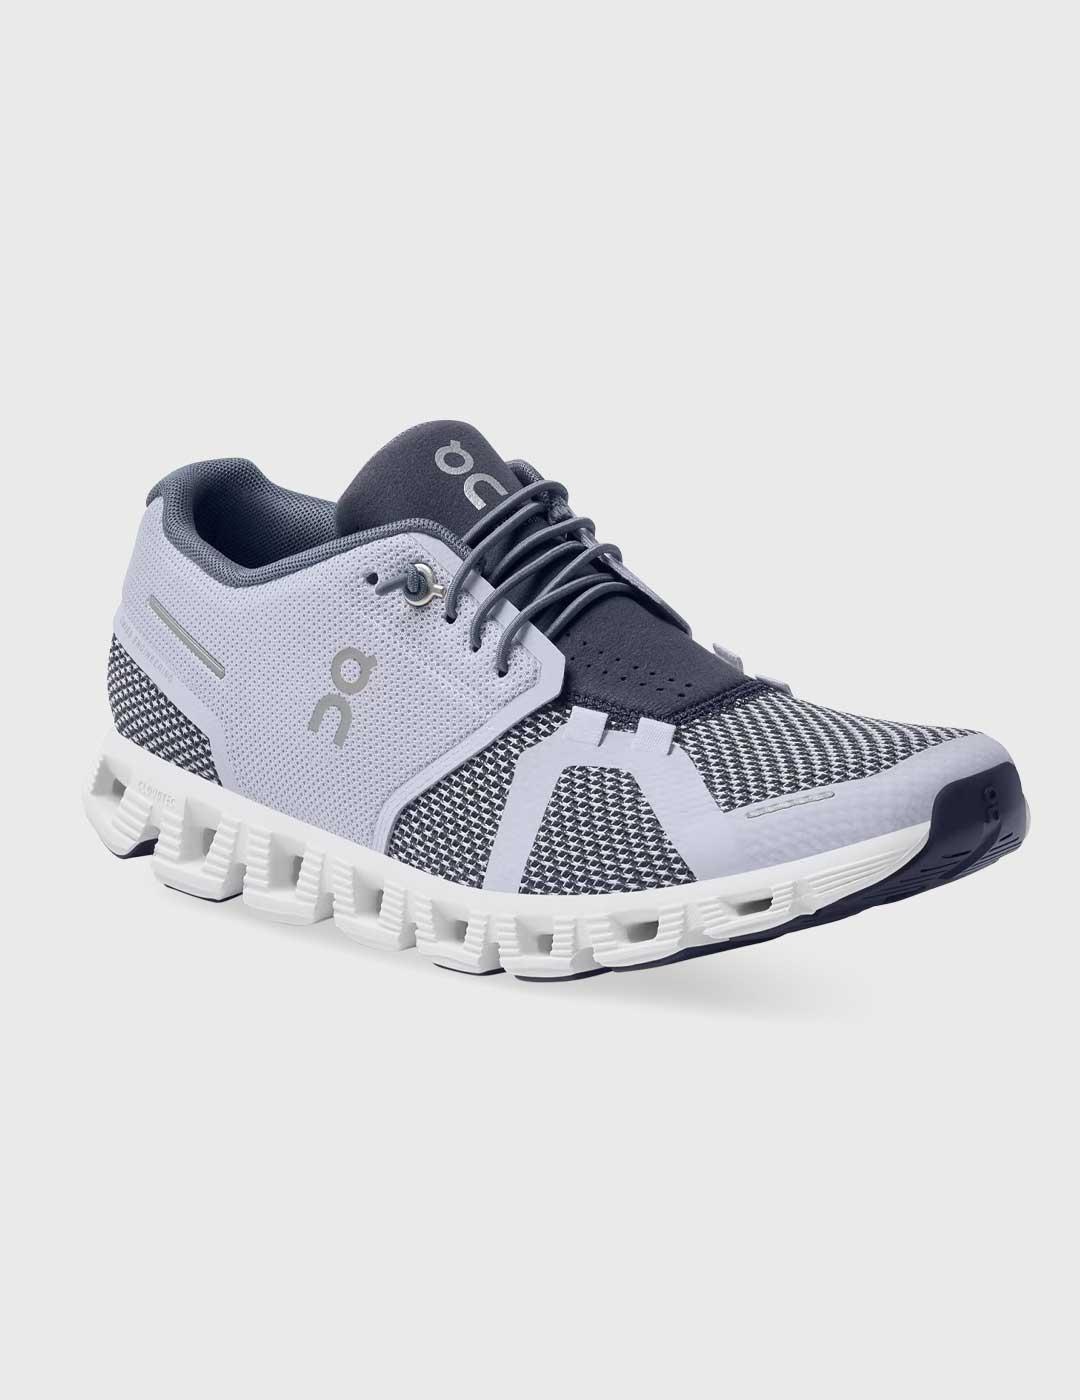 Zapatillas On Running Cloud 5 Combo azules para mujer y niña